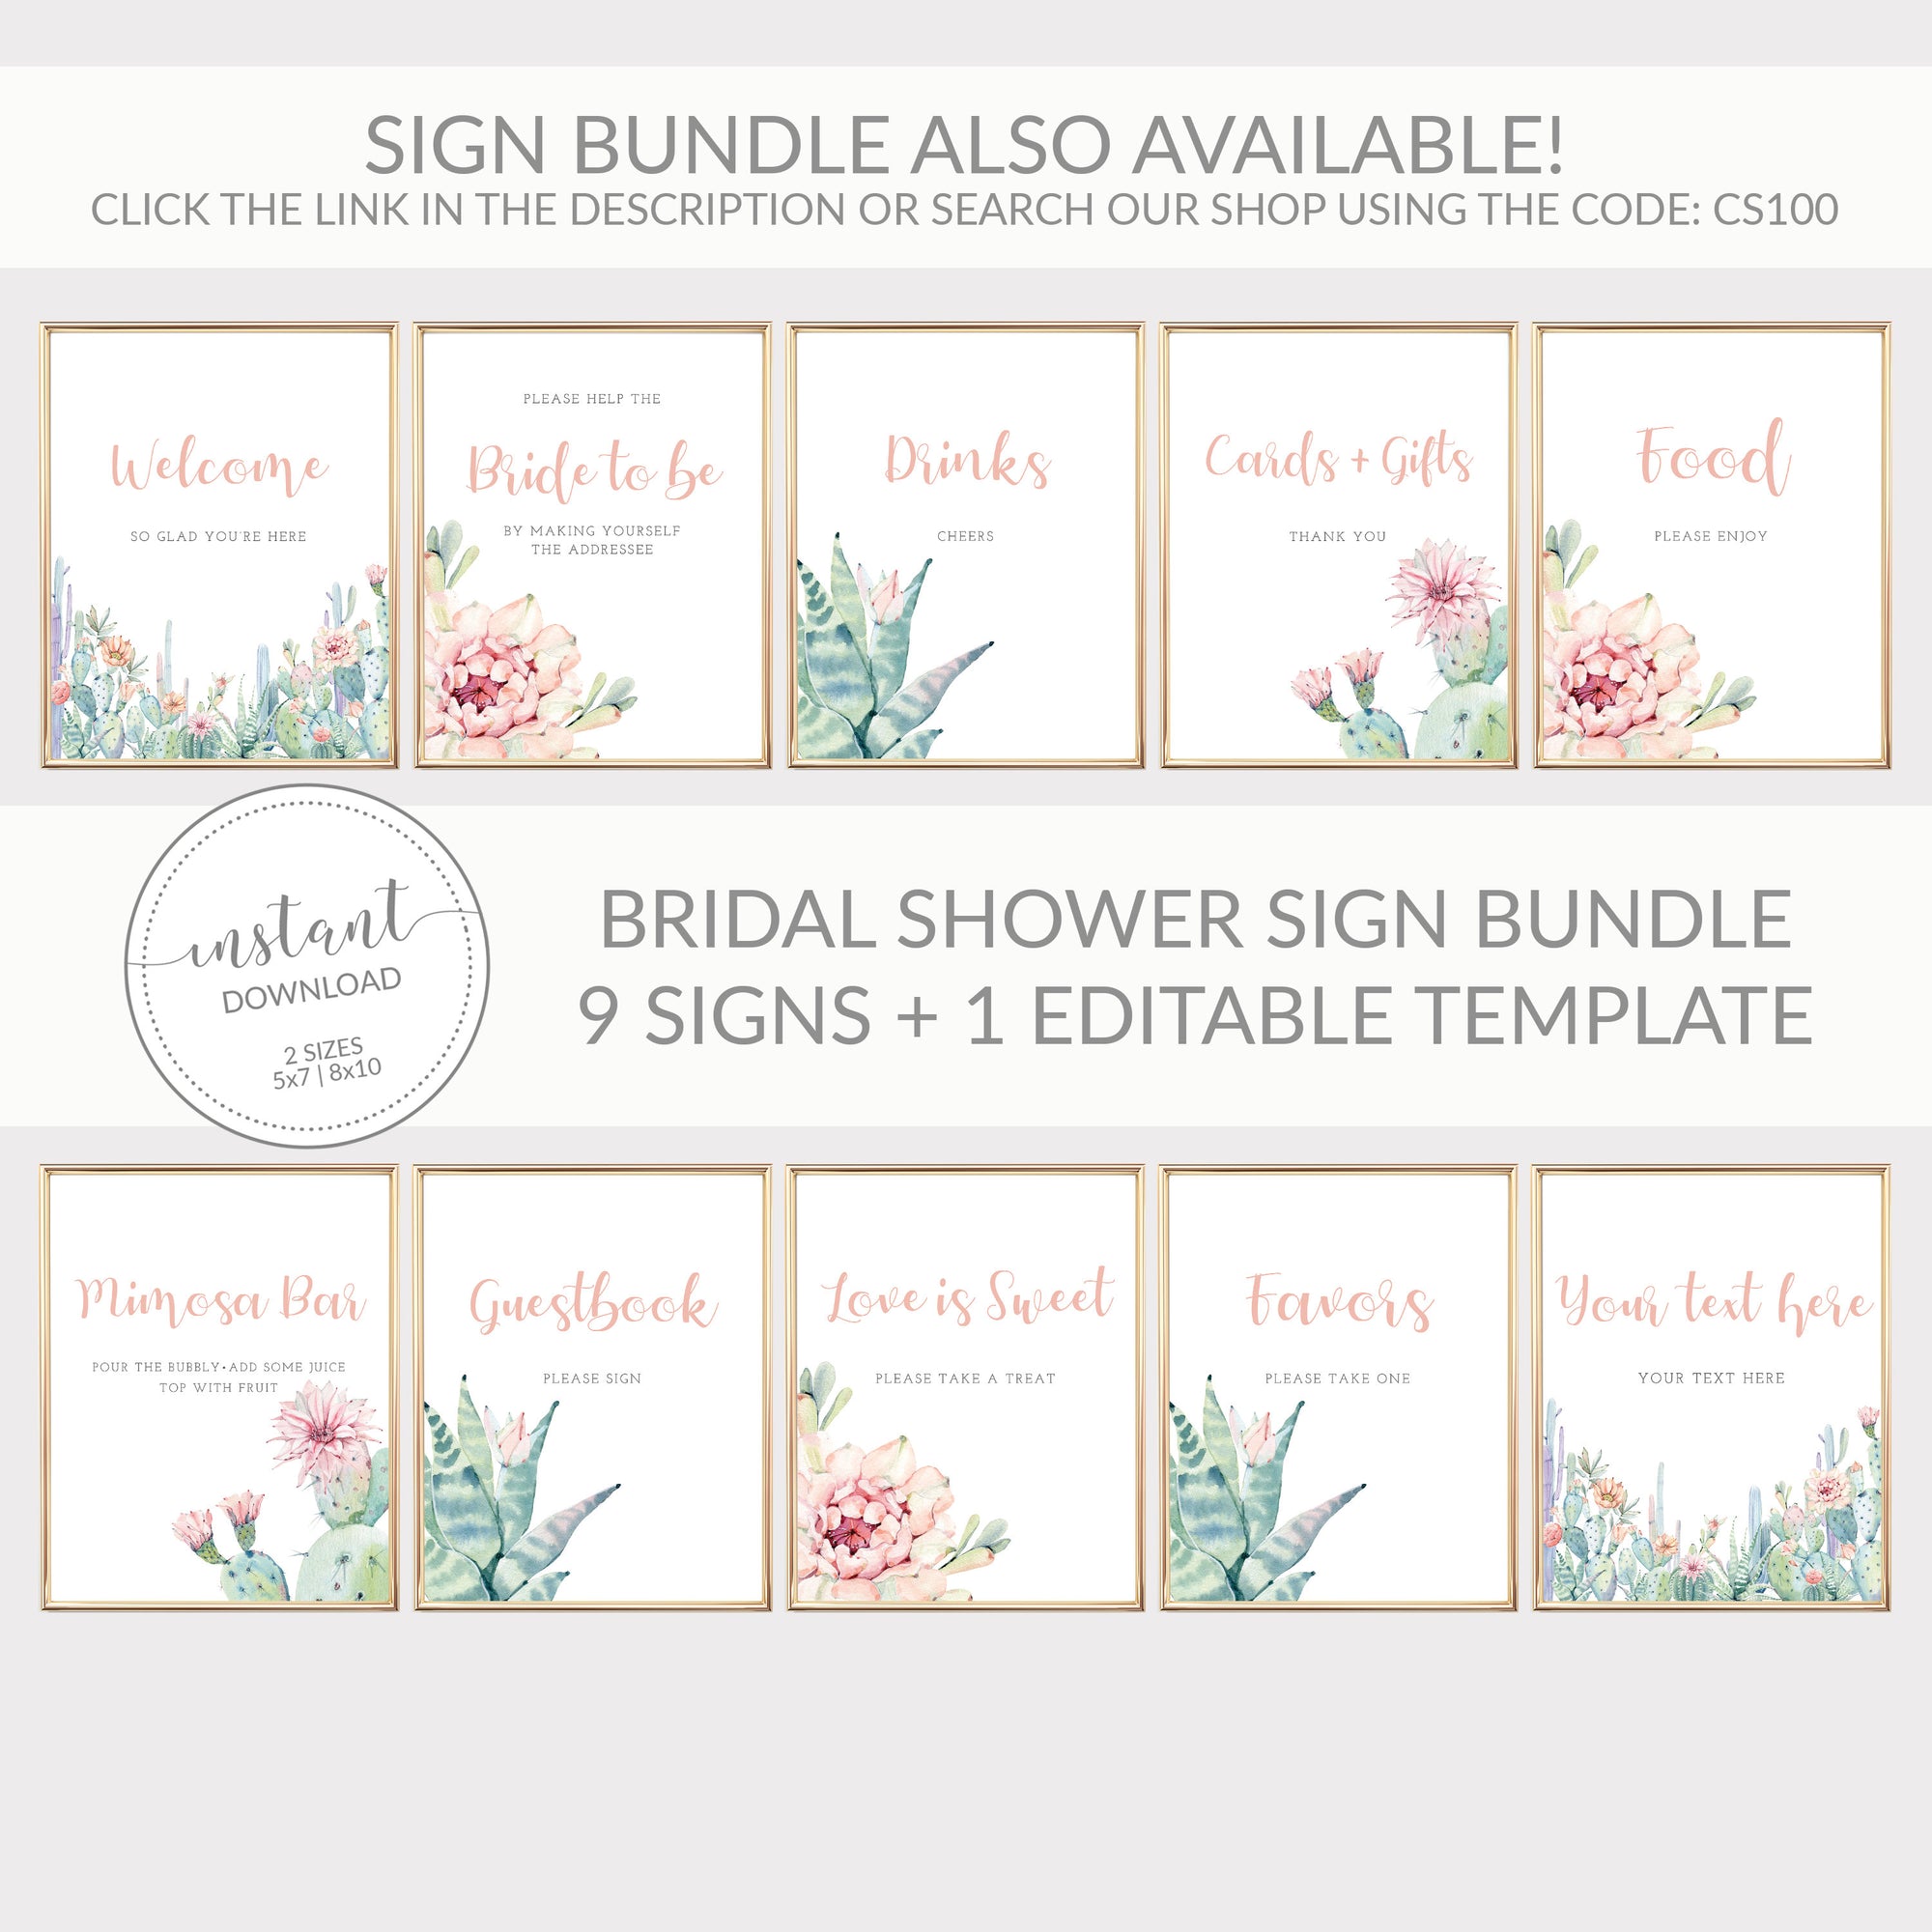 Succulent Bridal Shower Mimosa Bar Sign Printable, Cactus Bridal Shower Bubbly Bar Sign, Succulent Decorations, DIGITAL DOWNLOAD - CS100 - @PlumPolkaDot 